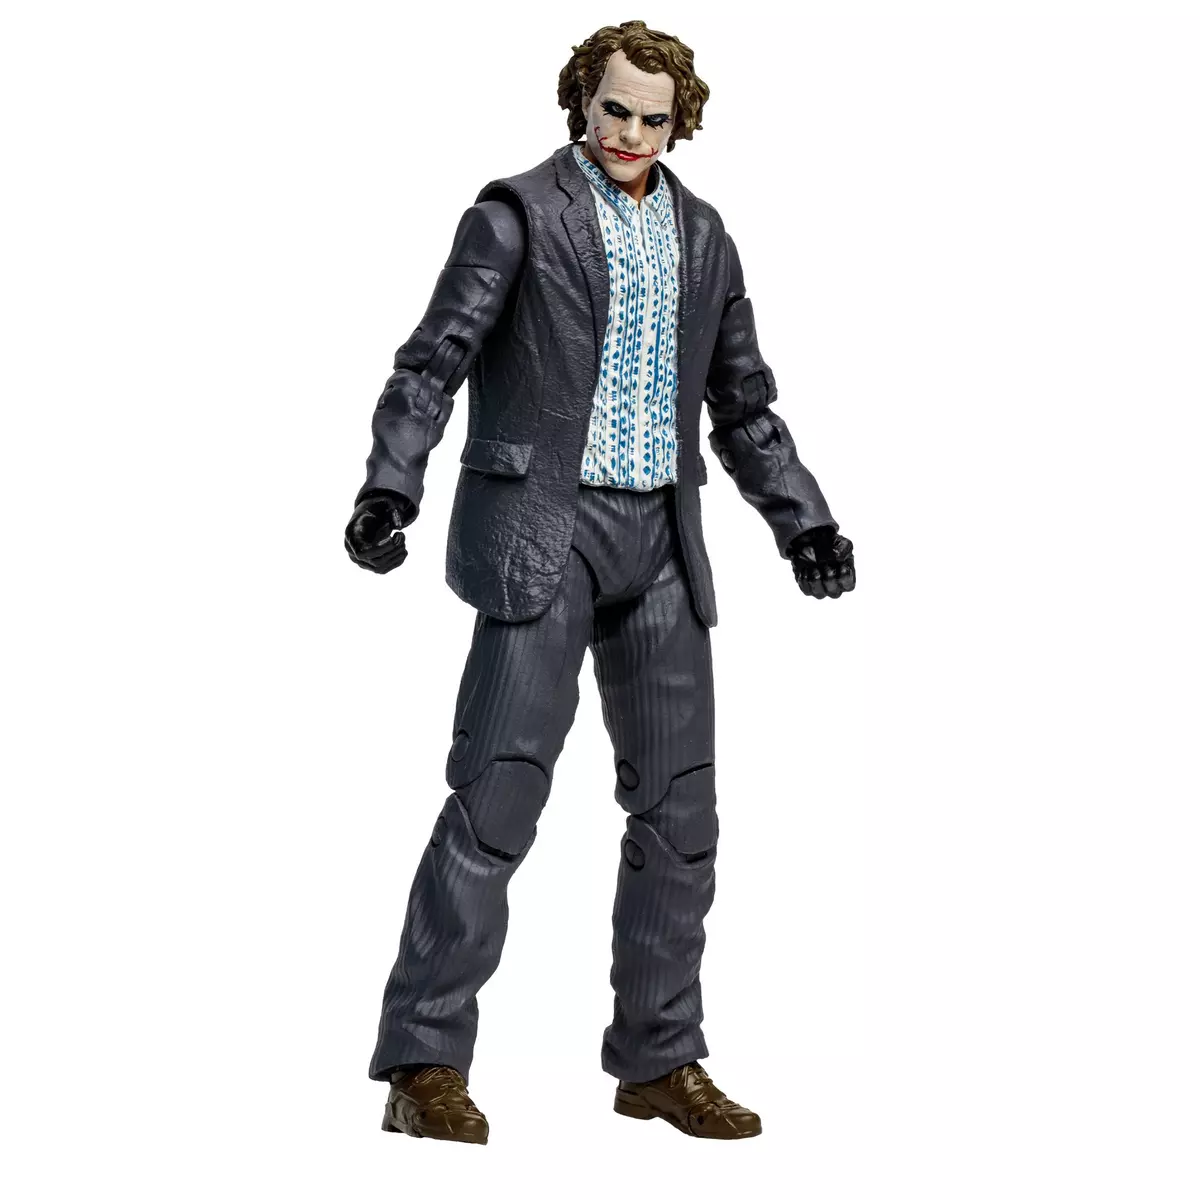 LANSAY Figurine The Joker Bank Robber - Batman The Dark Knight pas cher 